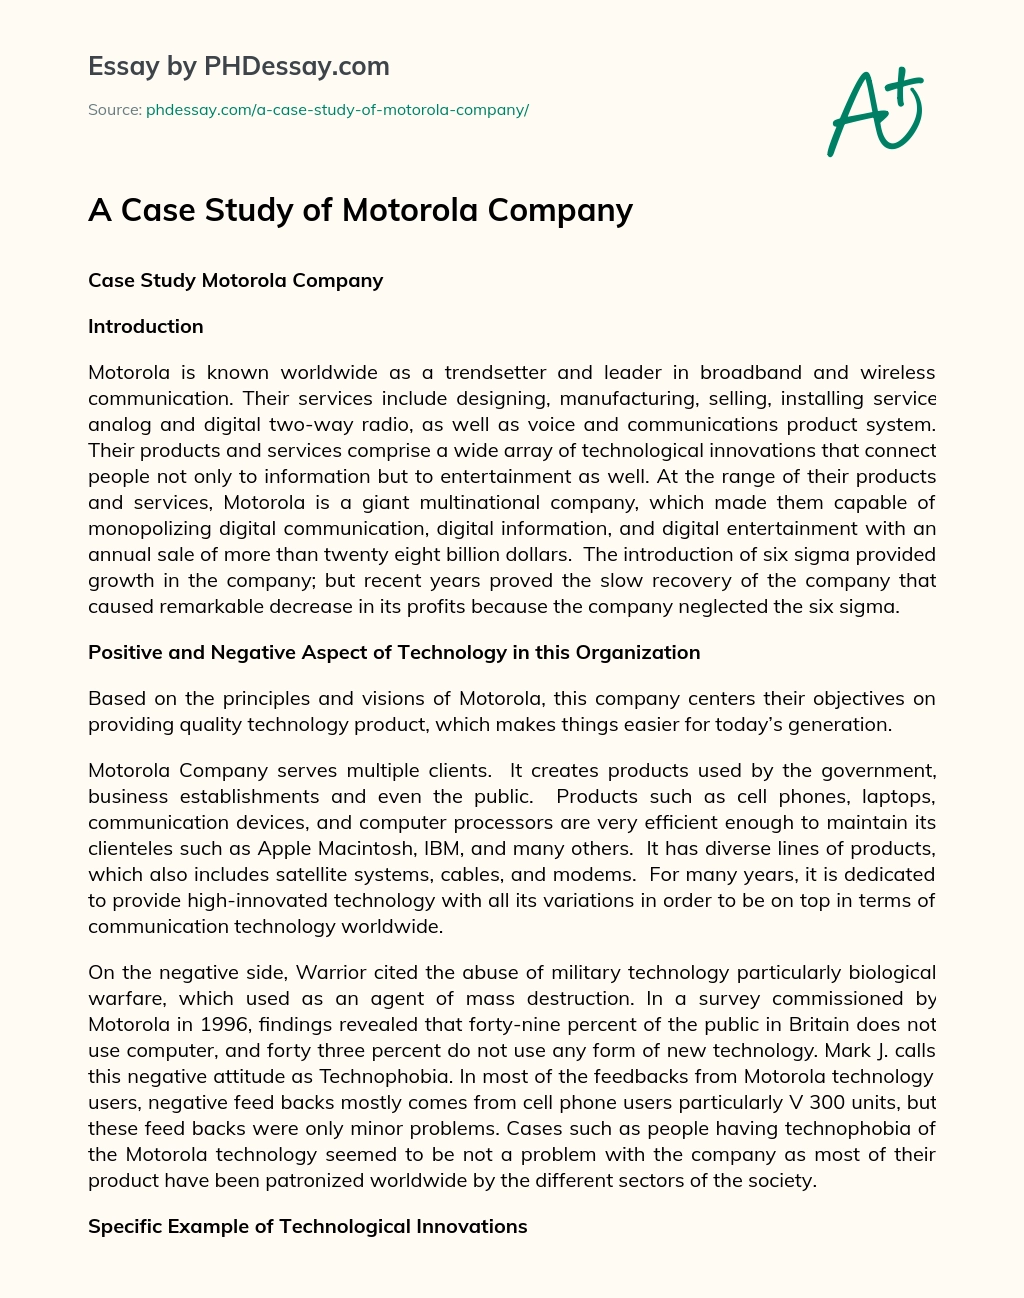 A Case Study of Motorola Company essay